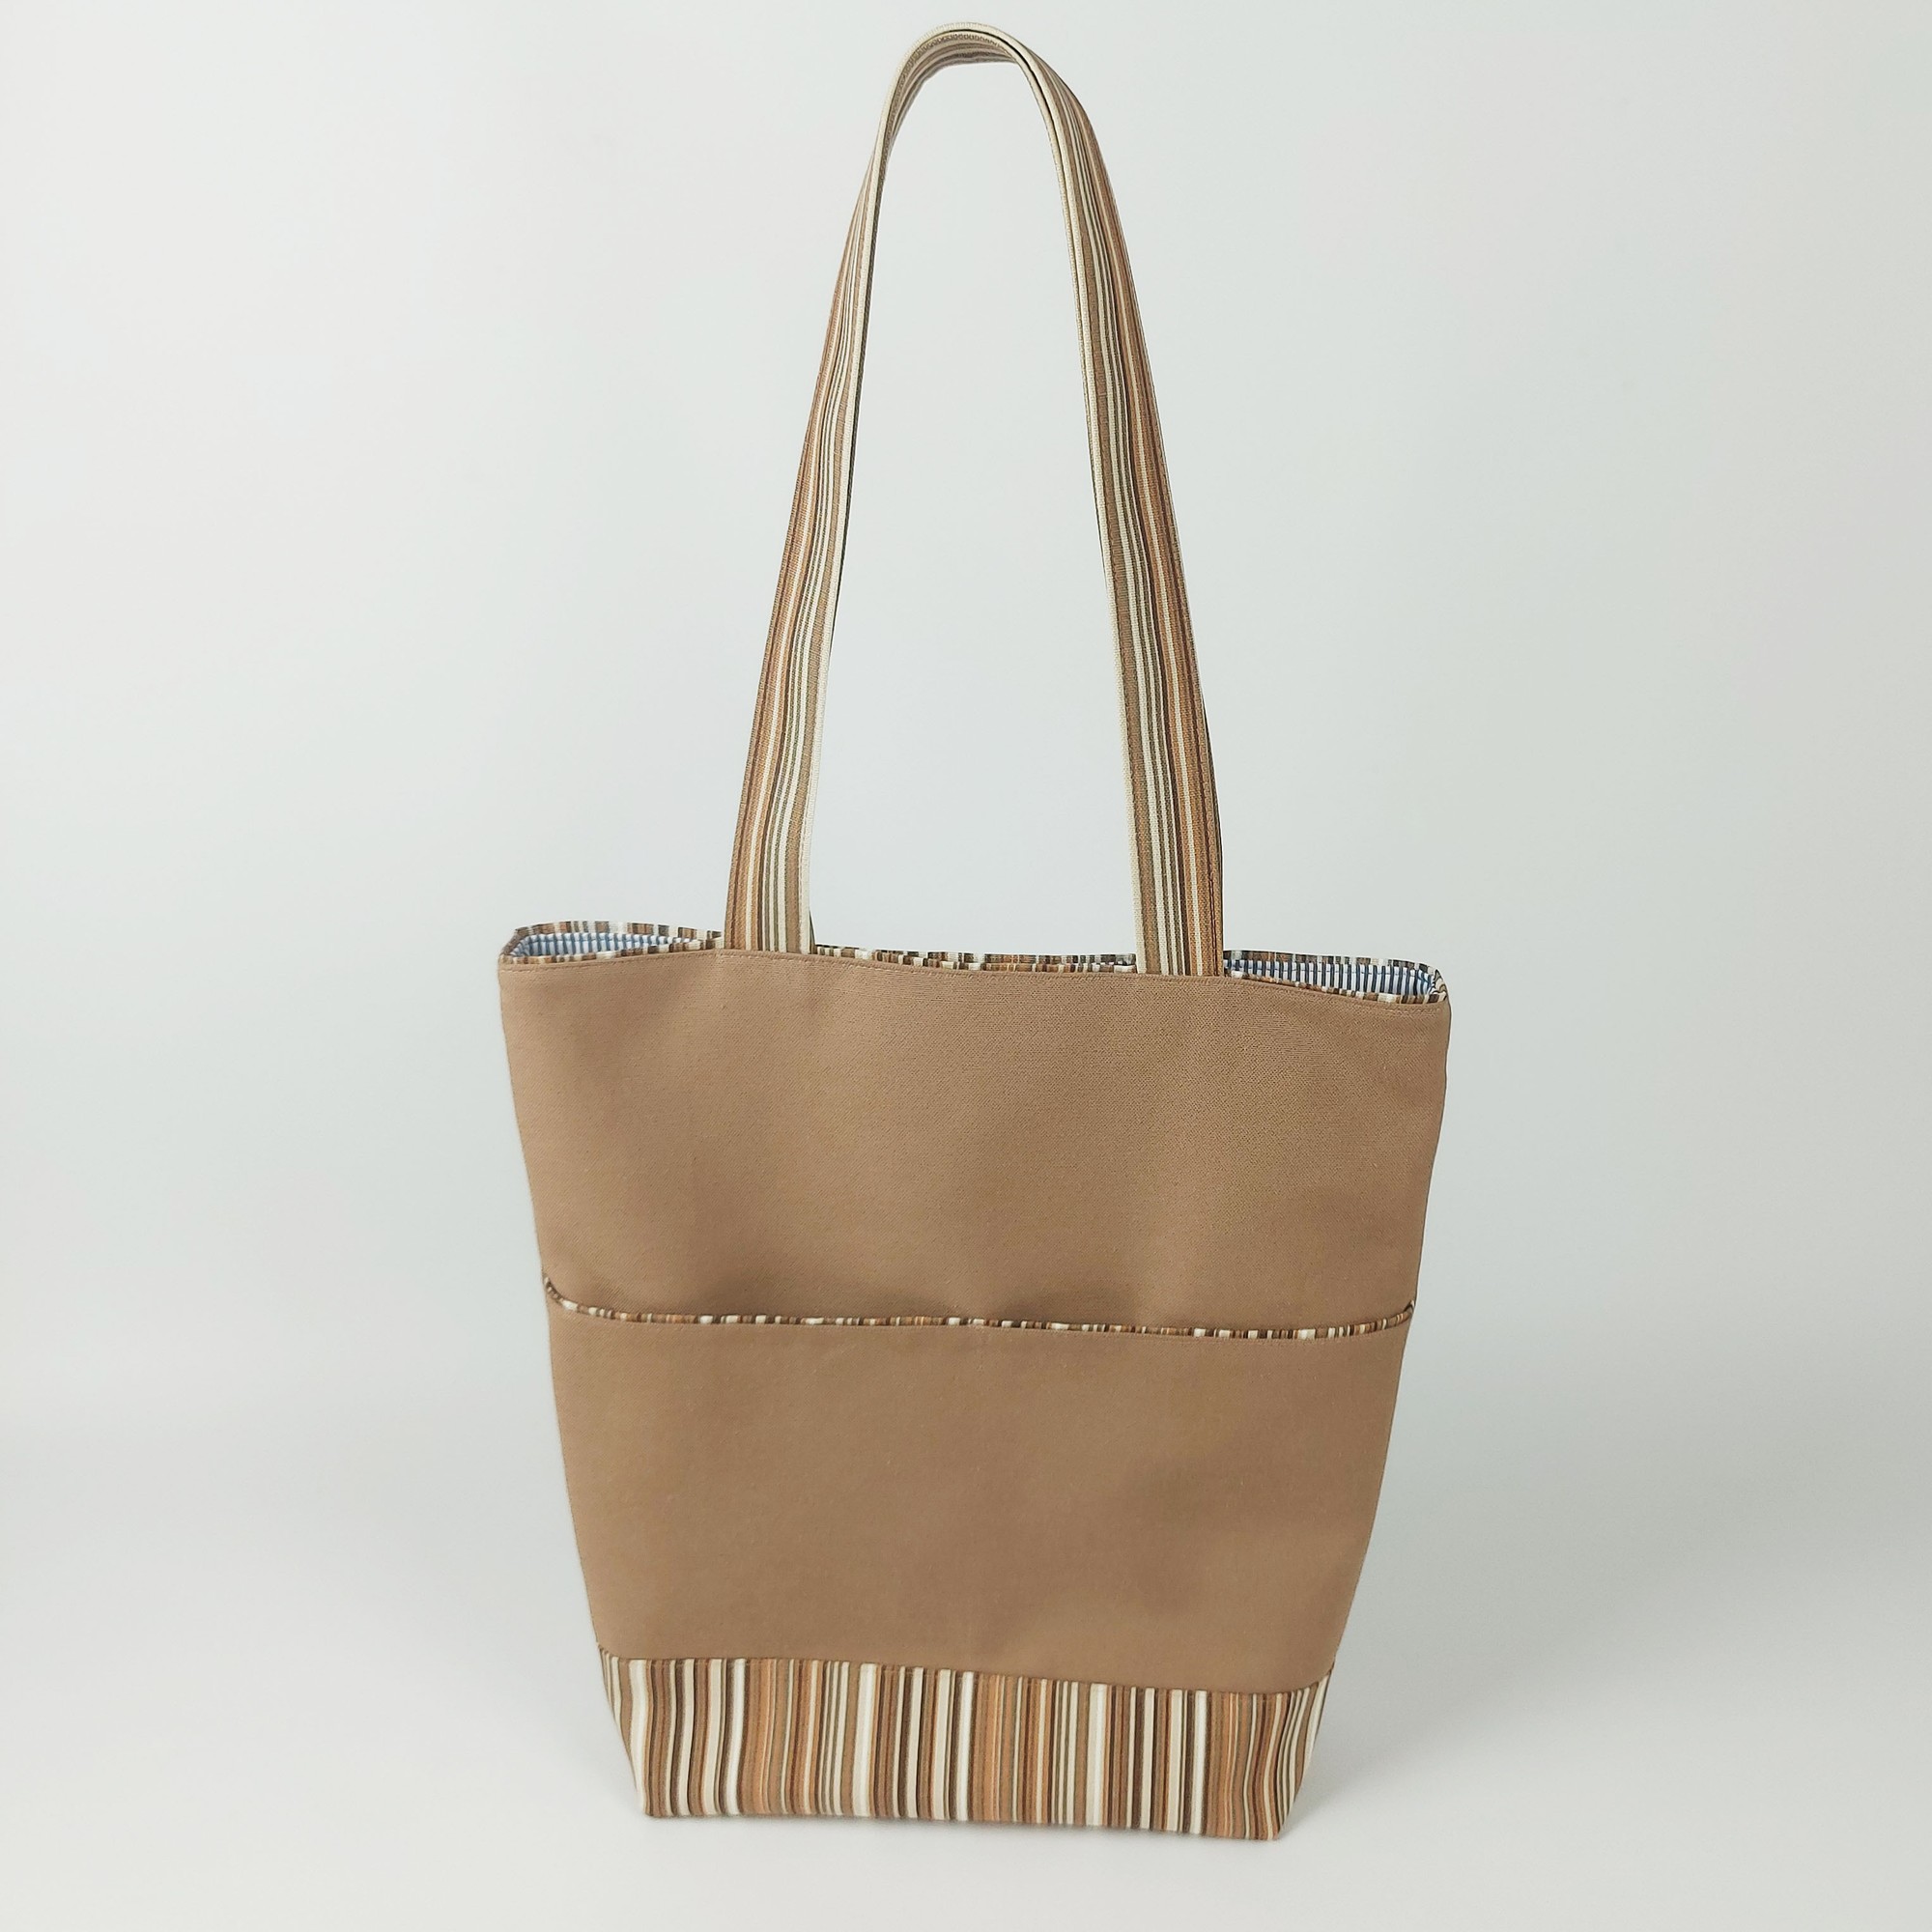 Handmade textile tote bag TOTE-classic